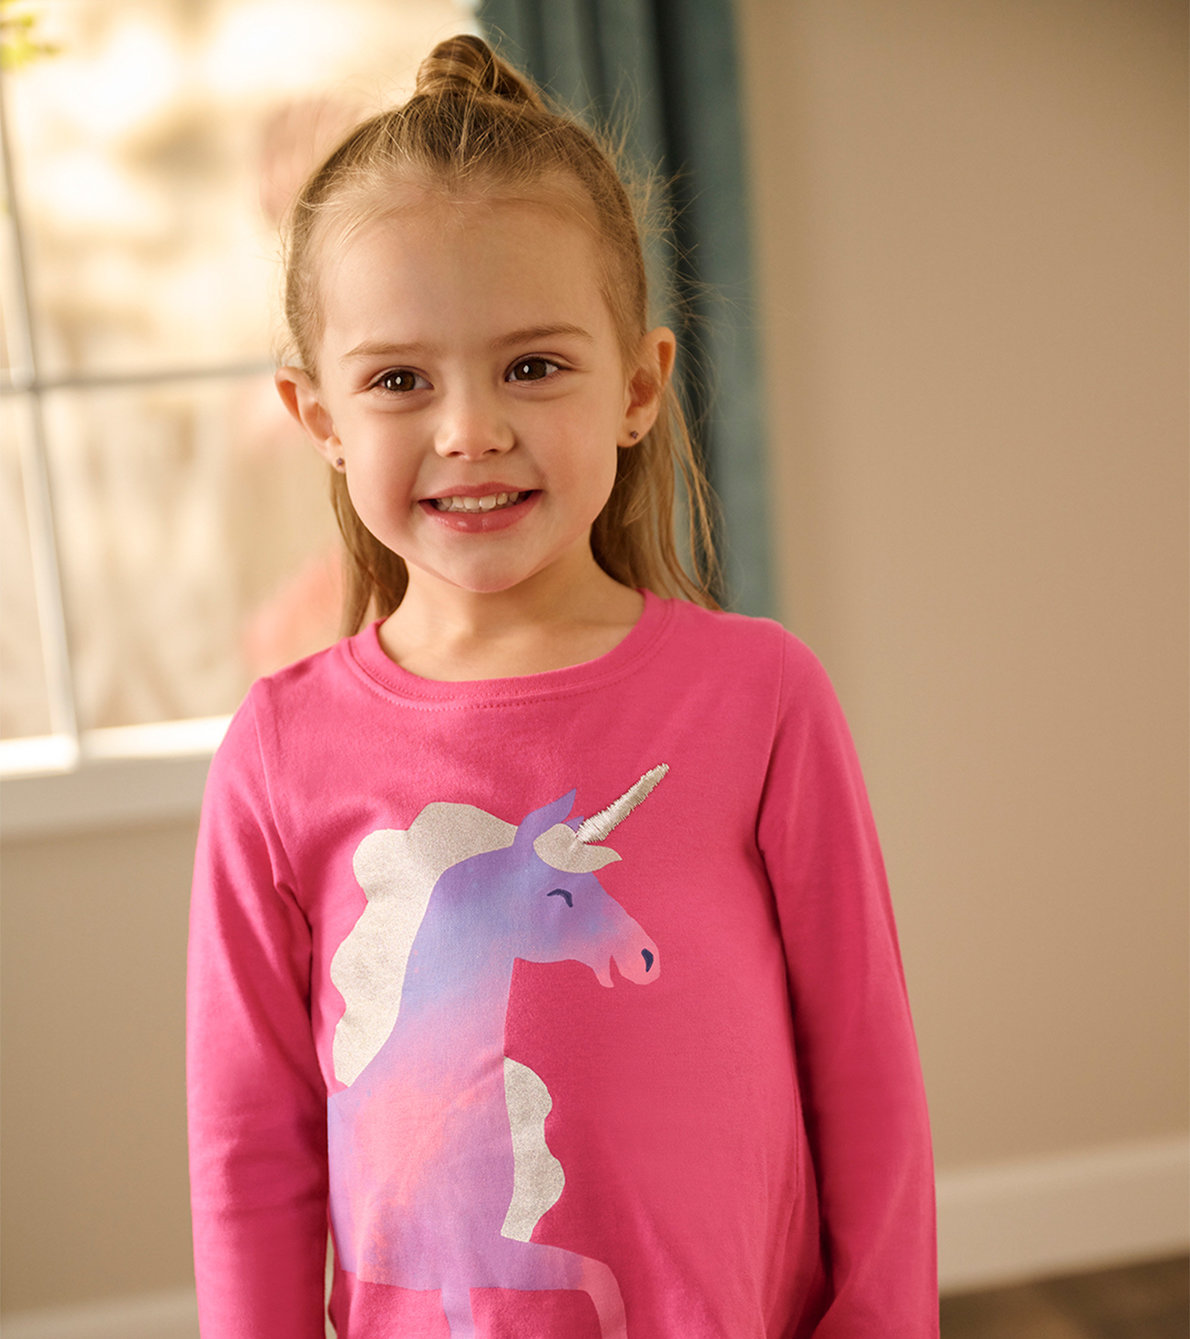 View larger image of Rasberry Unicorn Long Sleeve T-Shirt